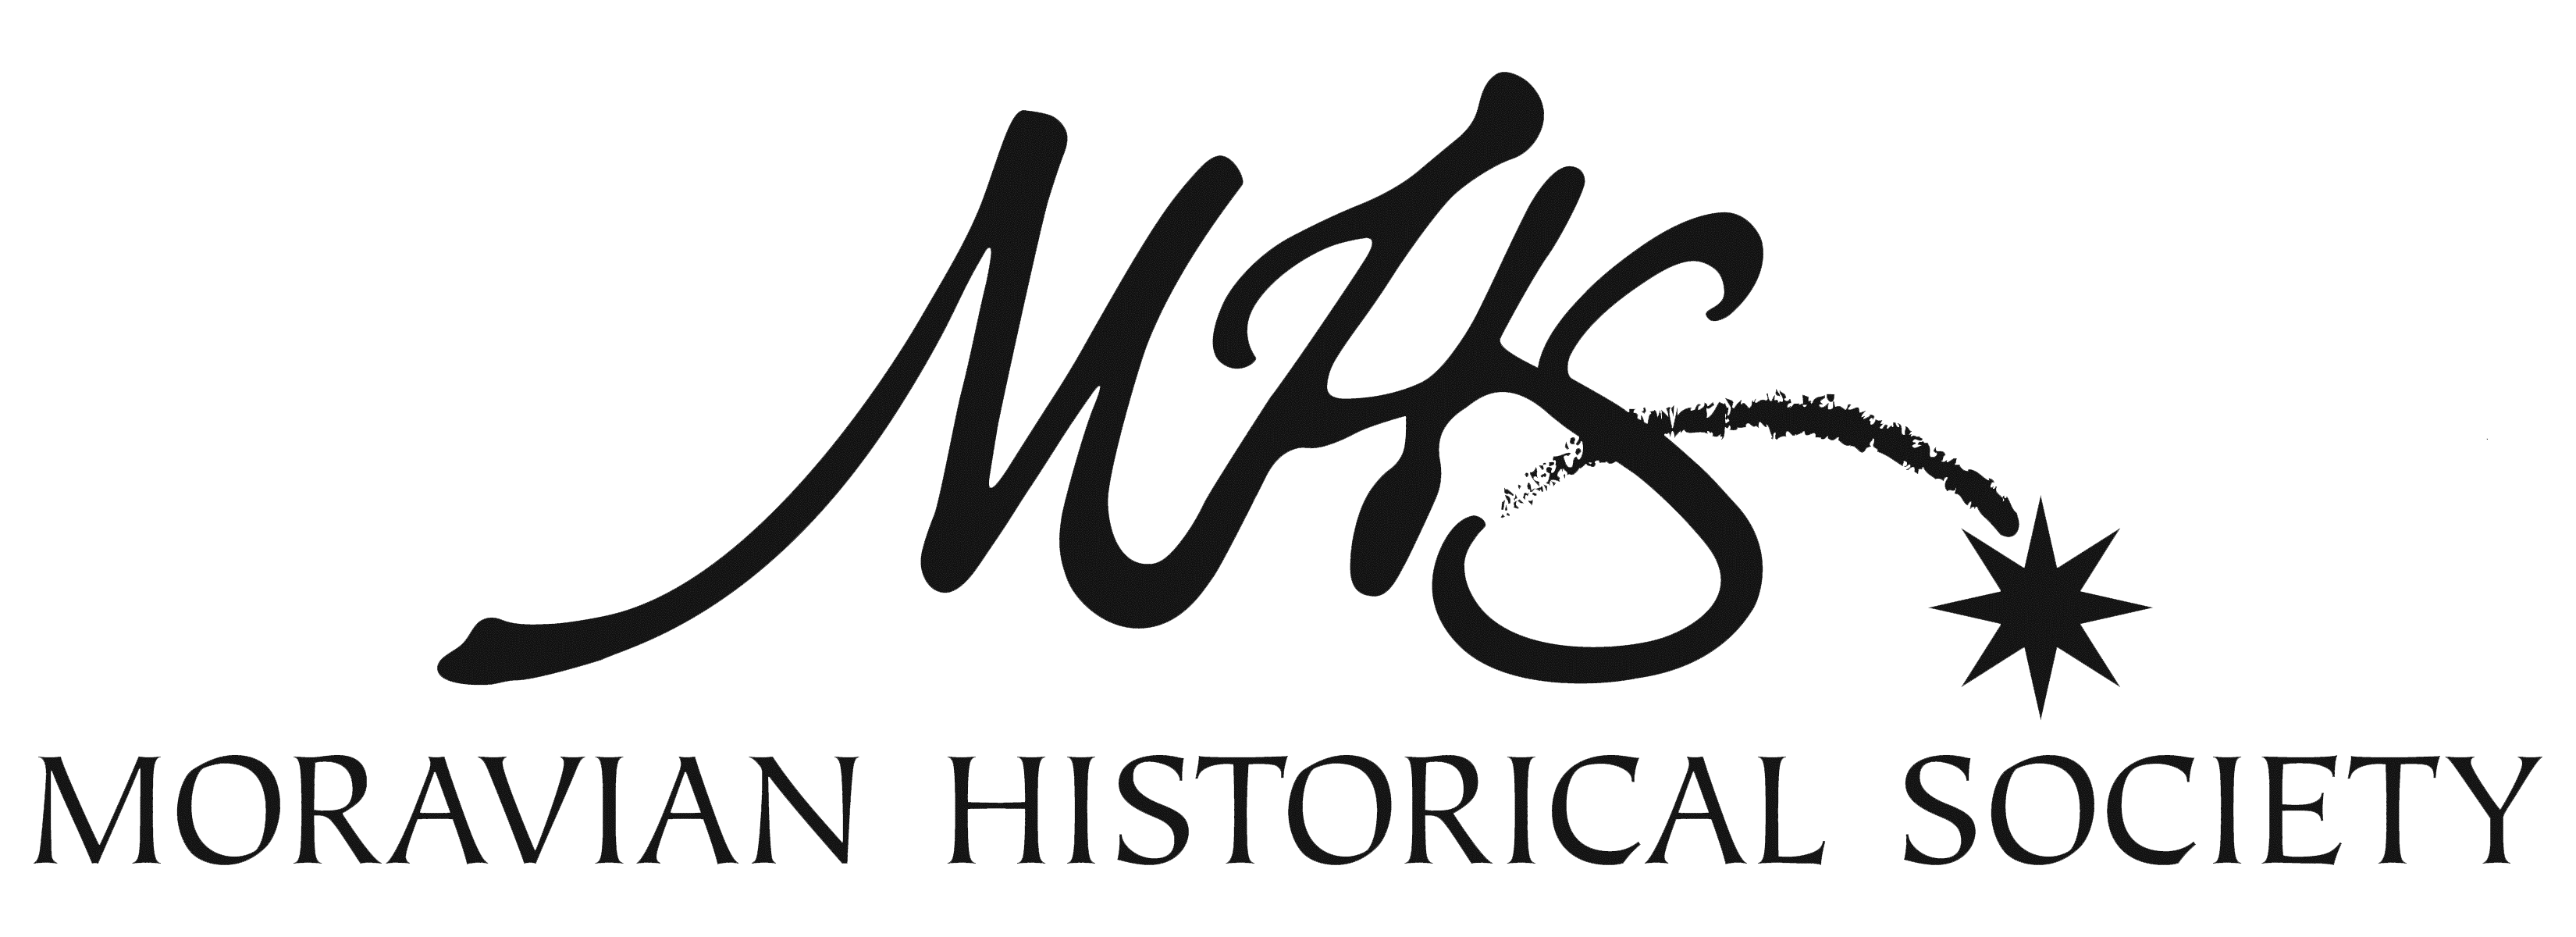 The Moravian Historical Society logo